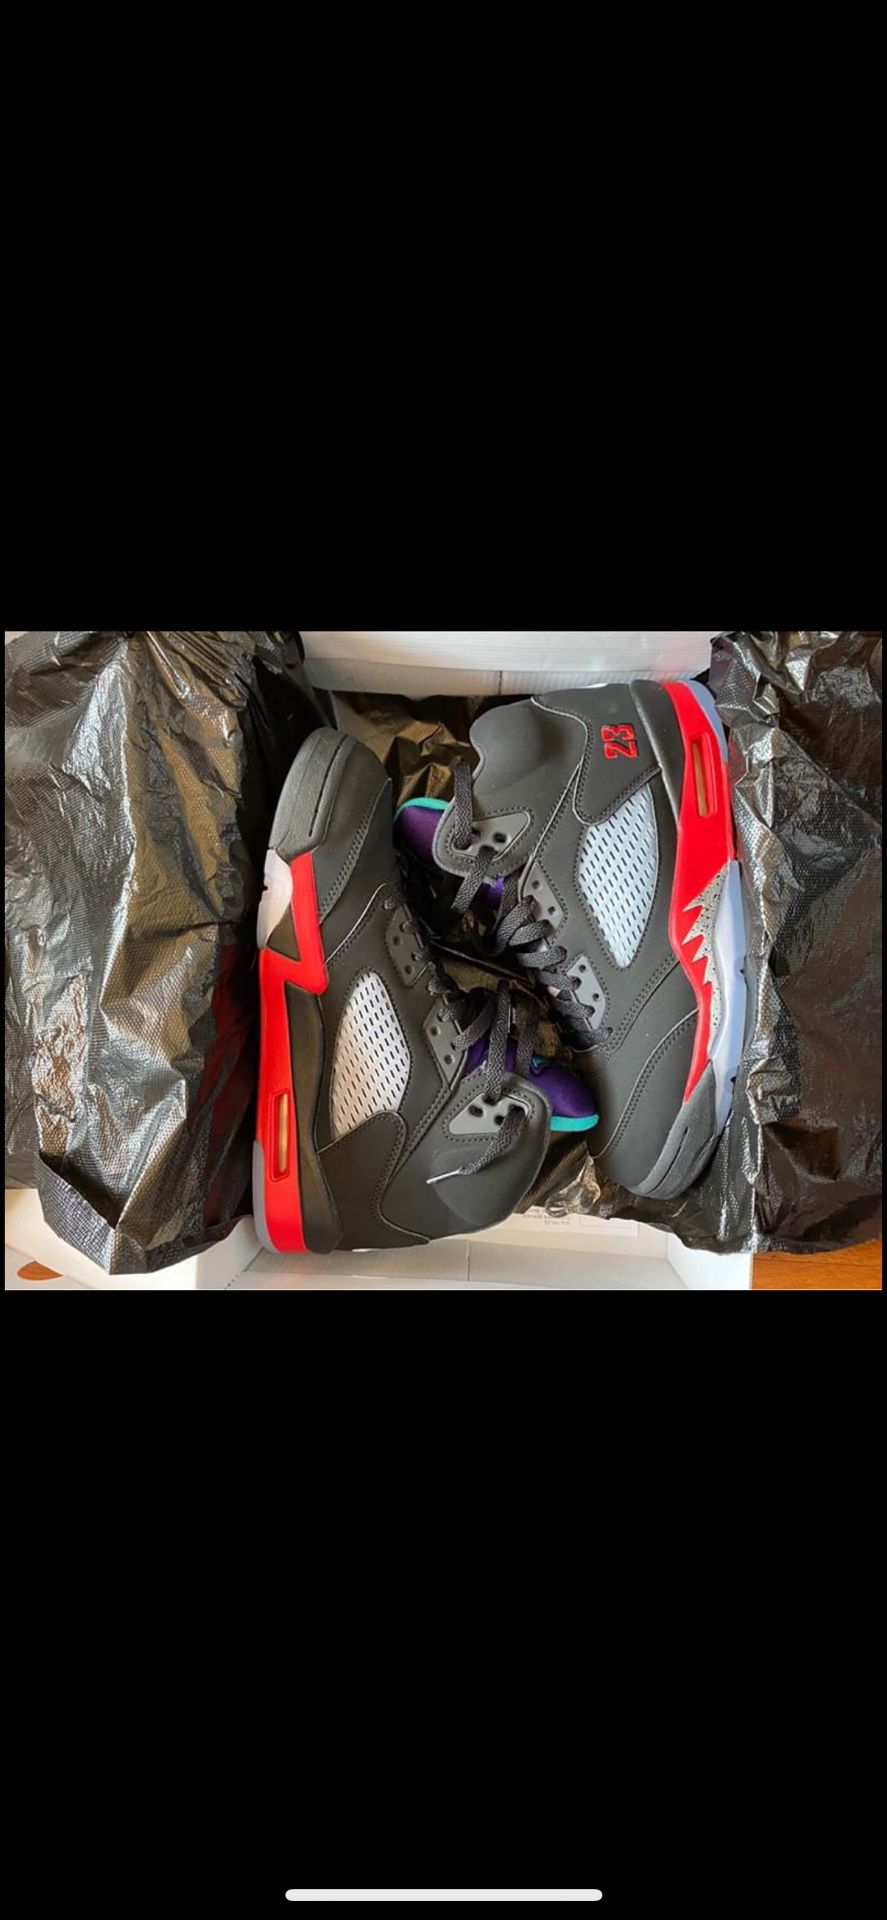 Jordan 5s size 9 Black/red/purple/white/turquoise